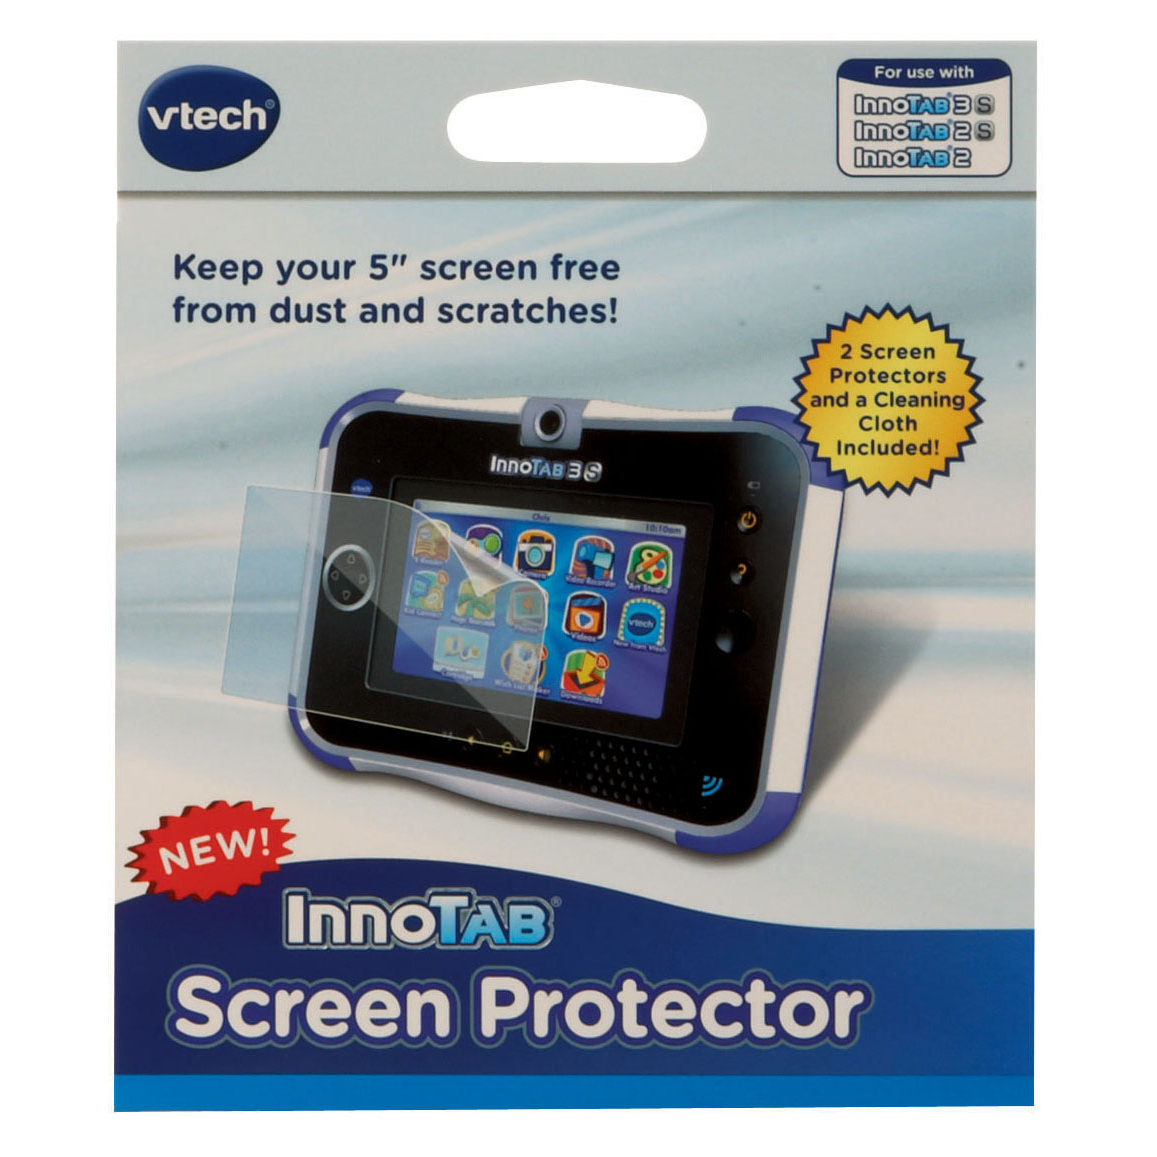 Vtech InnoTab 2 Screen Protector